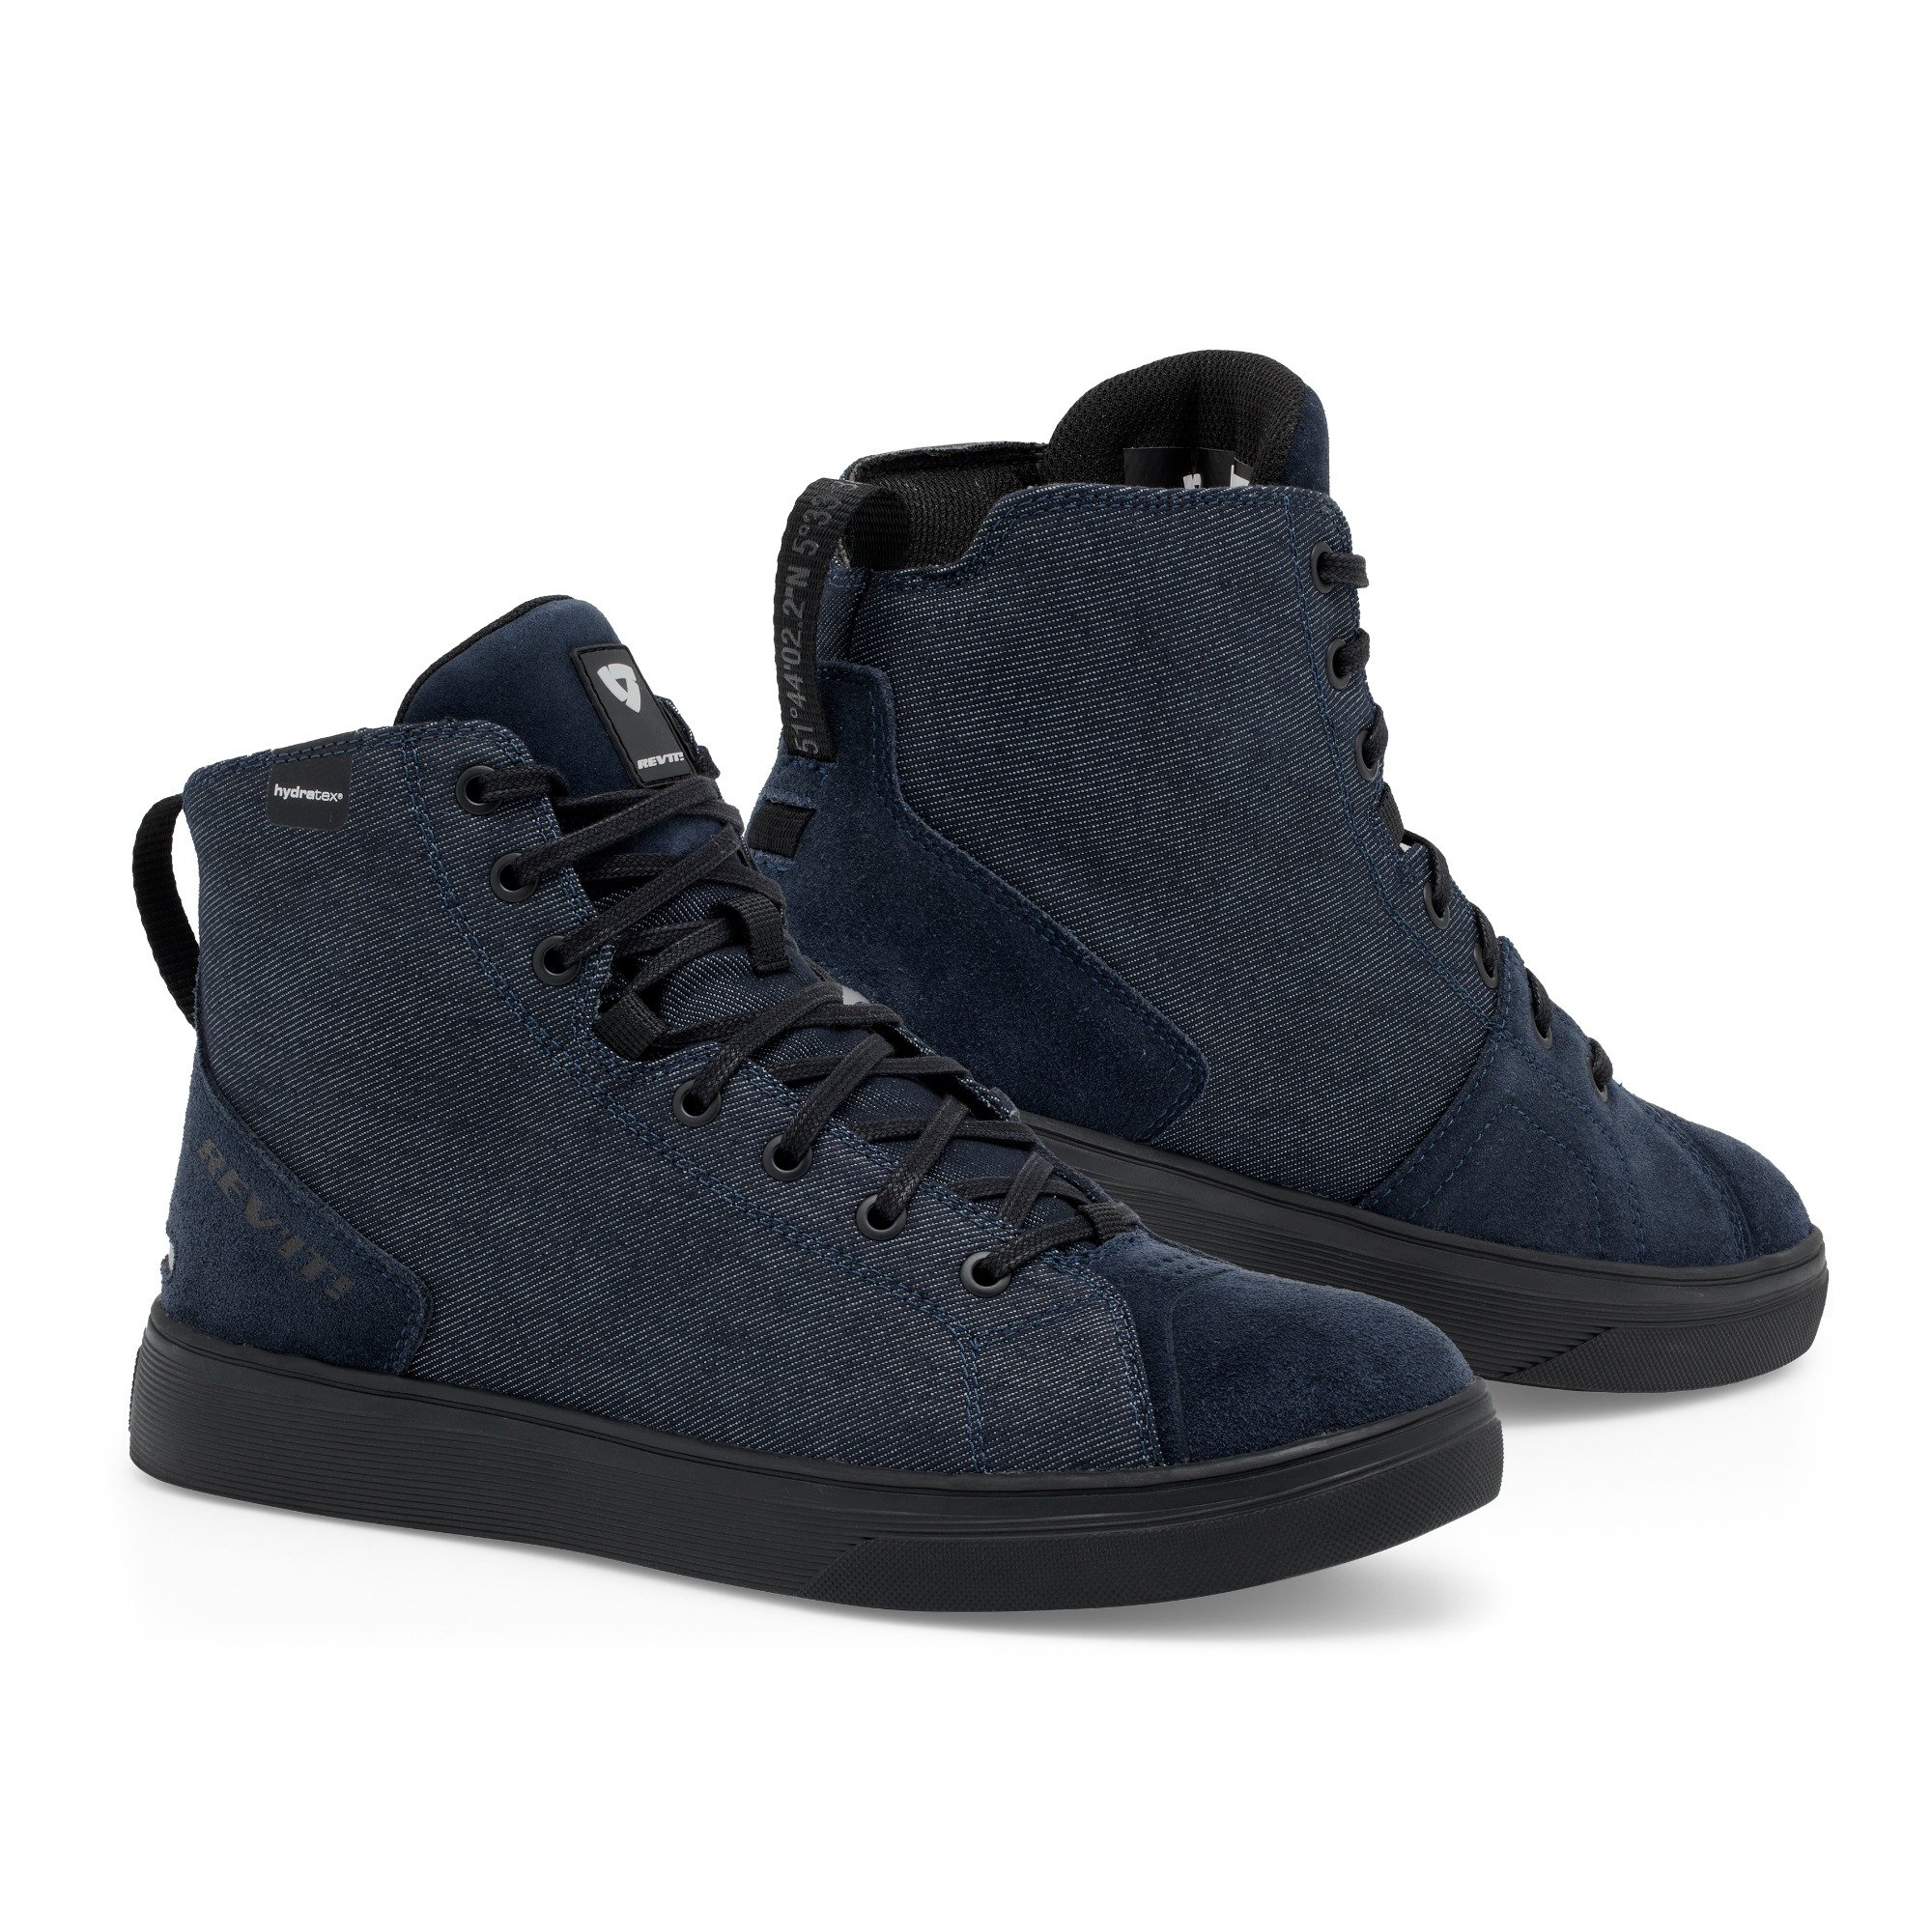 Image of REV'IT! Delta H2O Shoes Dark Blue Black Size 42 ID 8700001356459